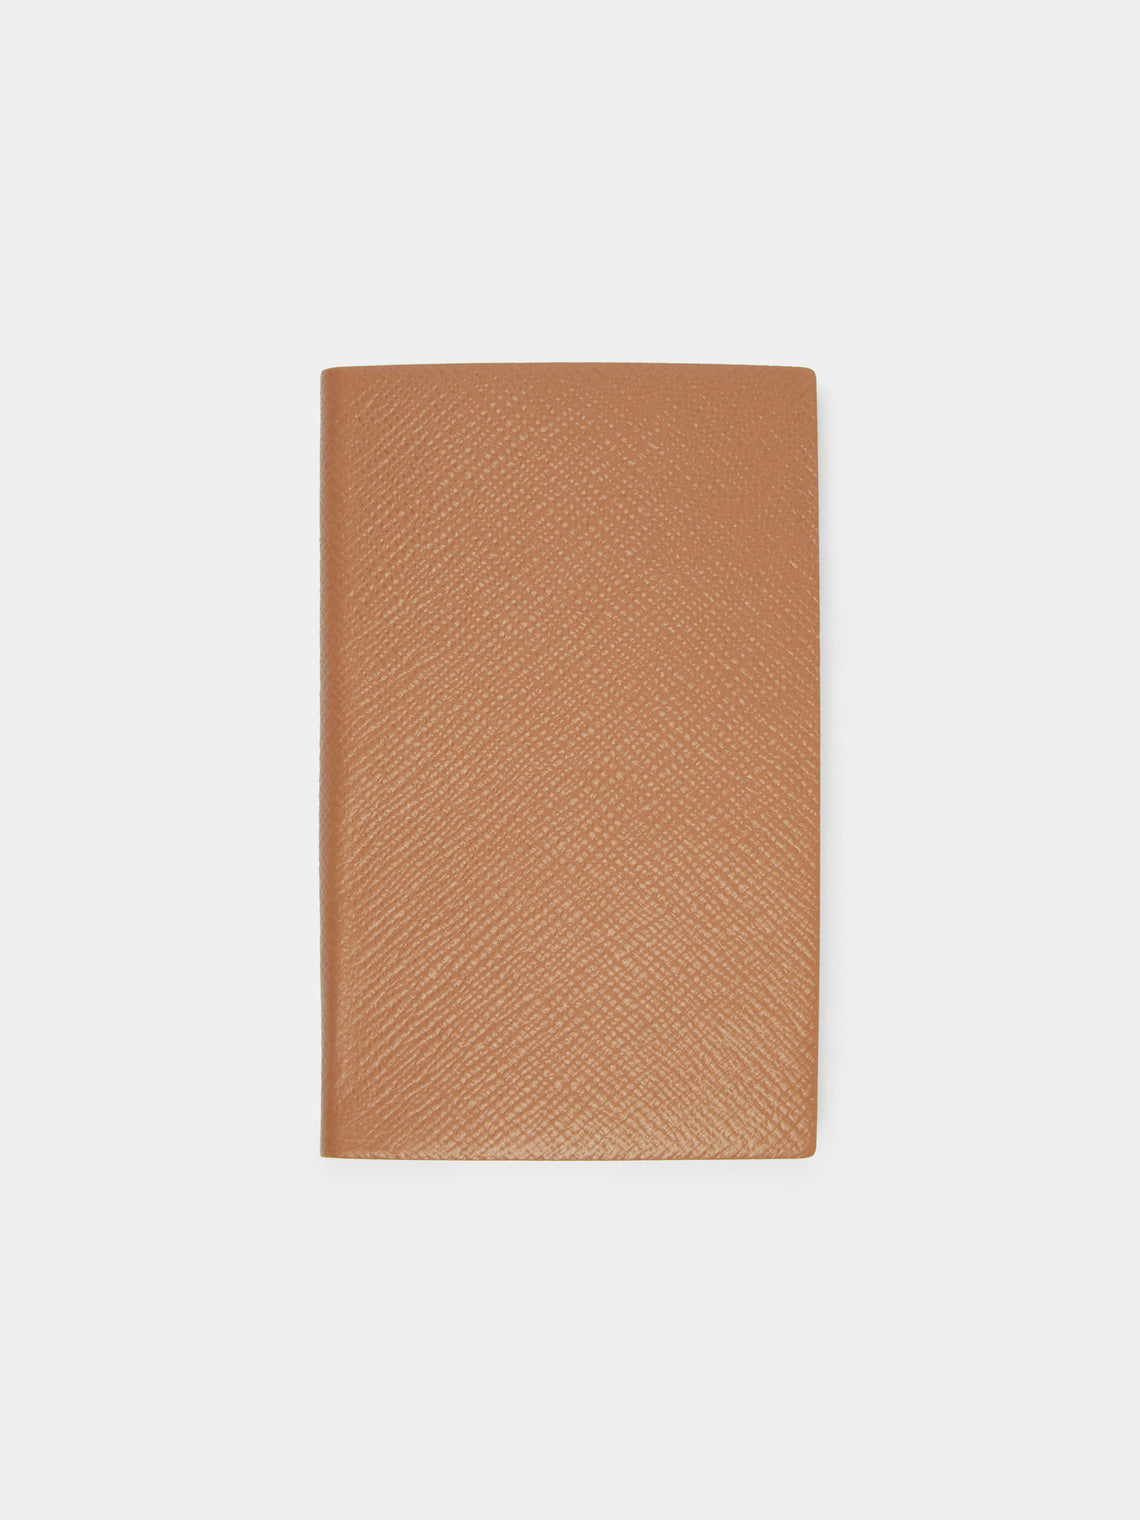 Smythson - Panama Leather Notebook - Tan - ABASK - 